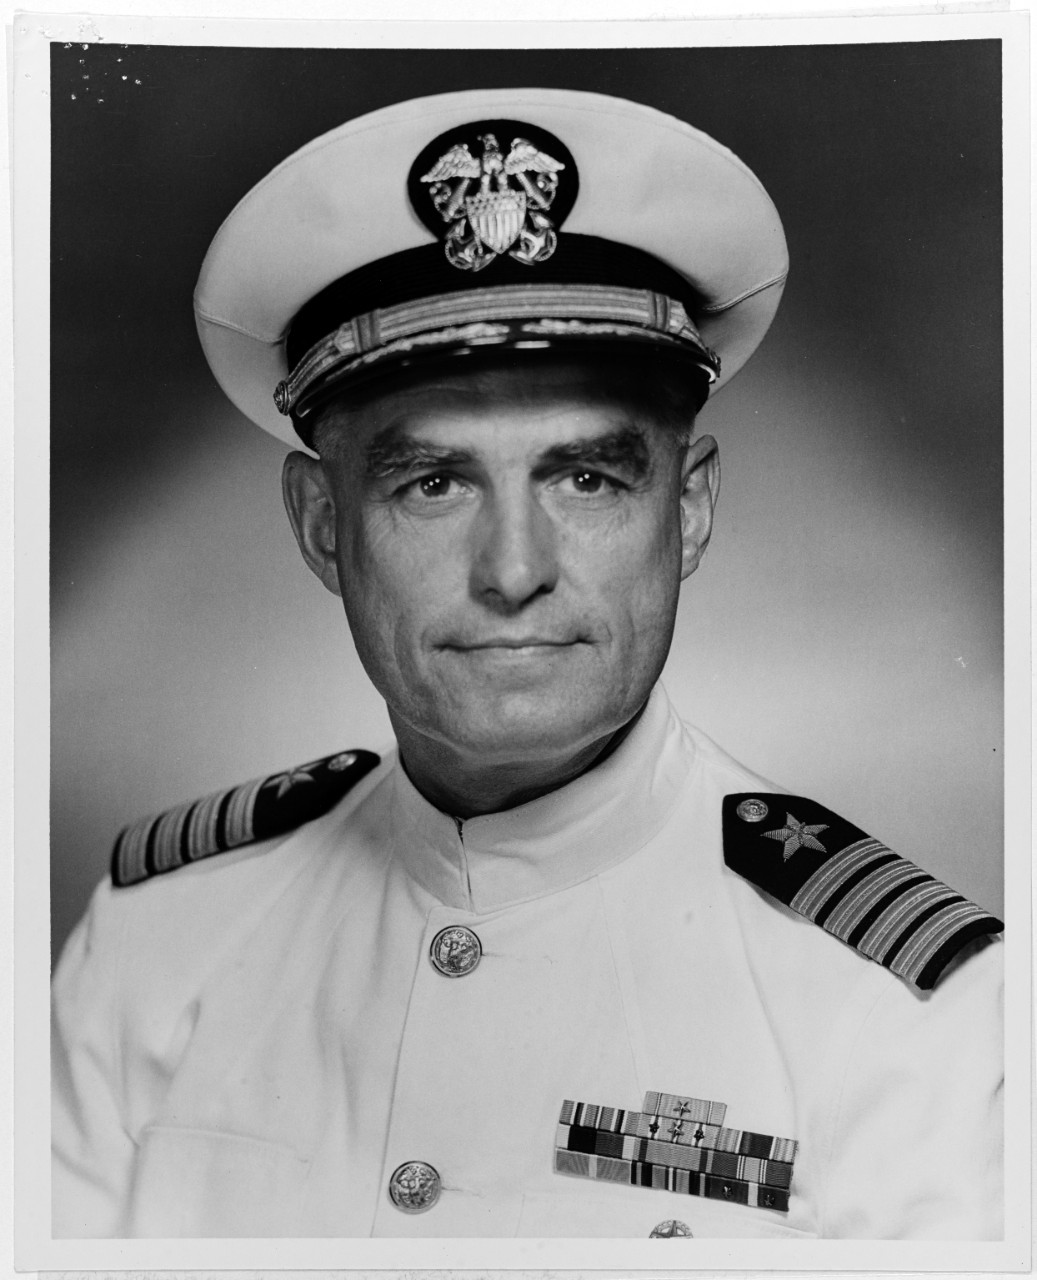 Captain James H. Curran, USN